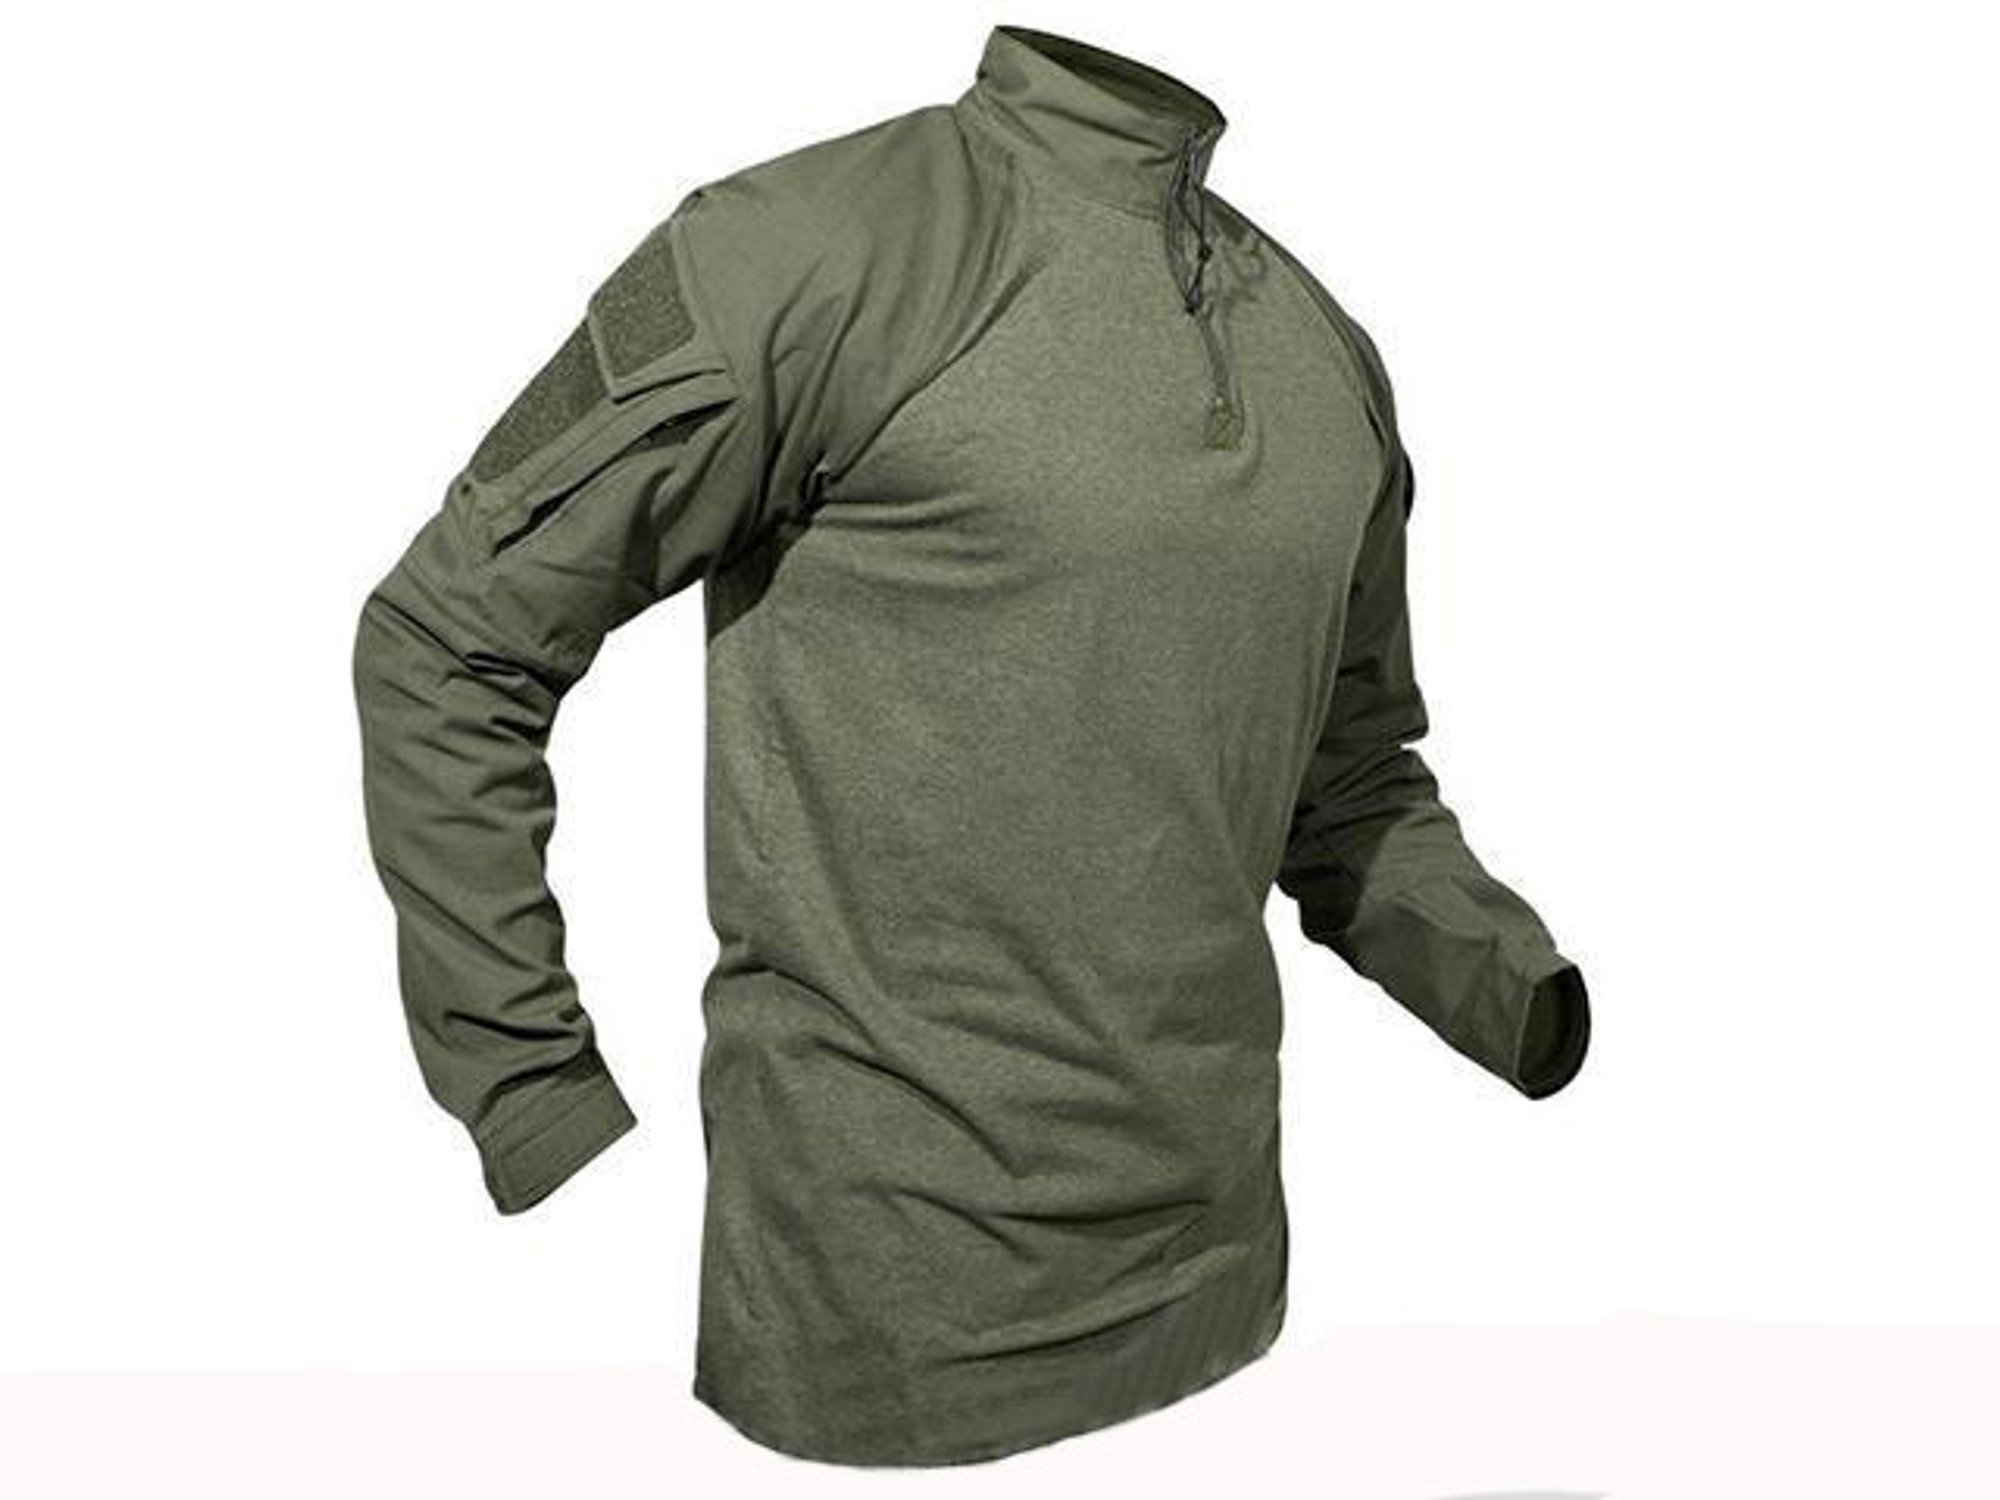 LBX Tactical Camouflage Combat Shirt - Ranger Green (Size: Large)